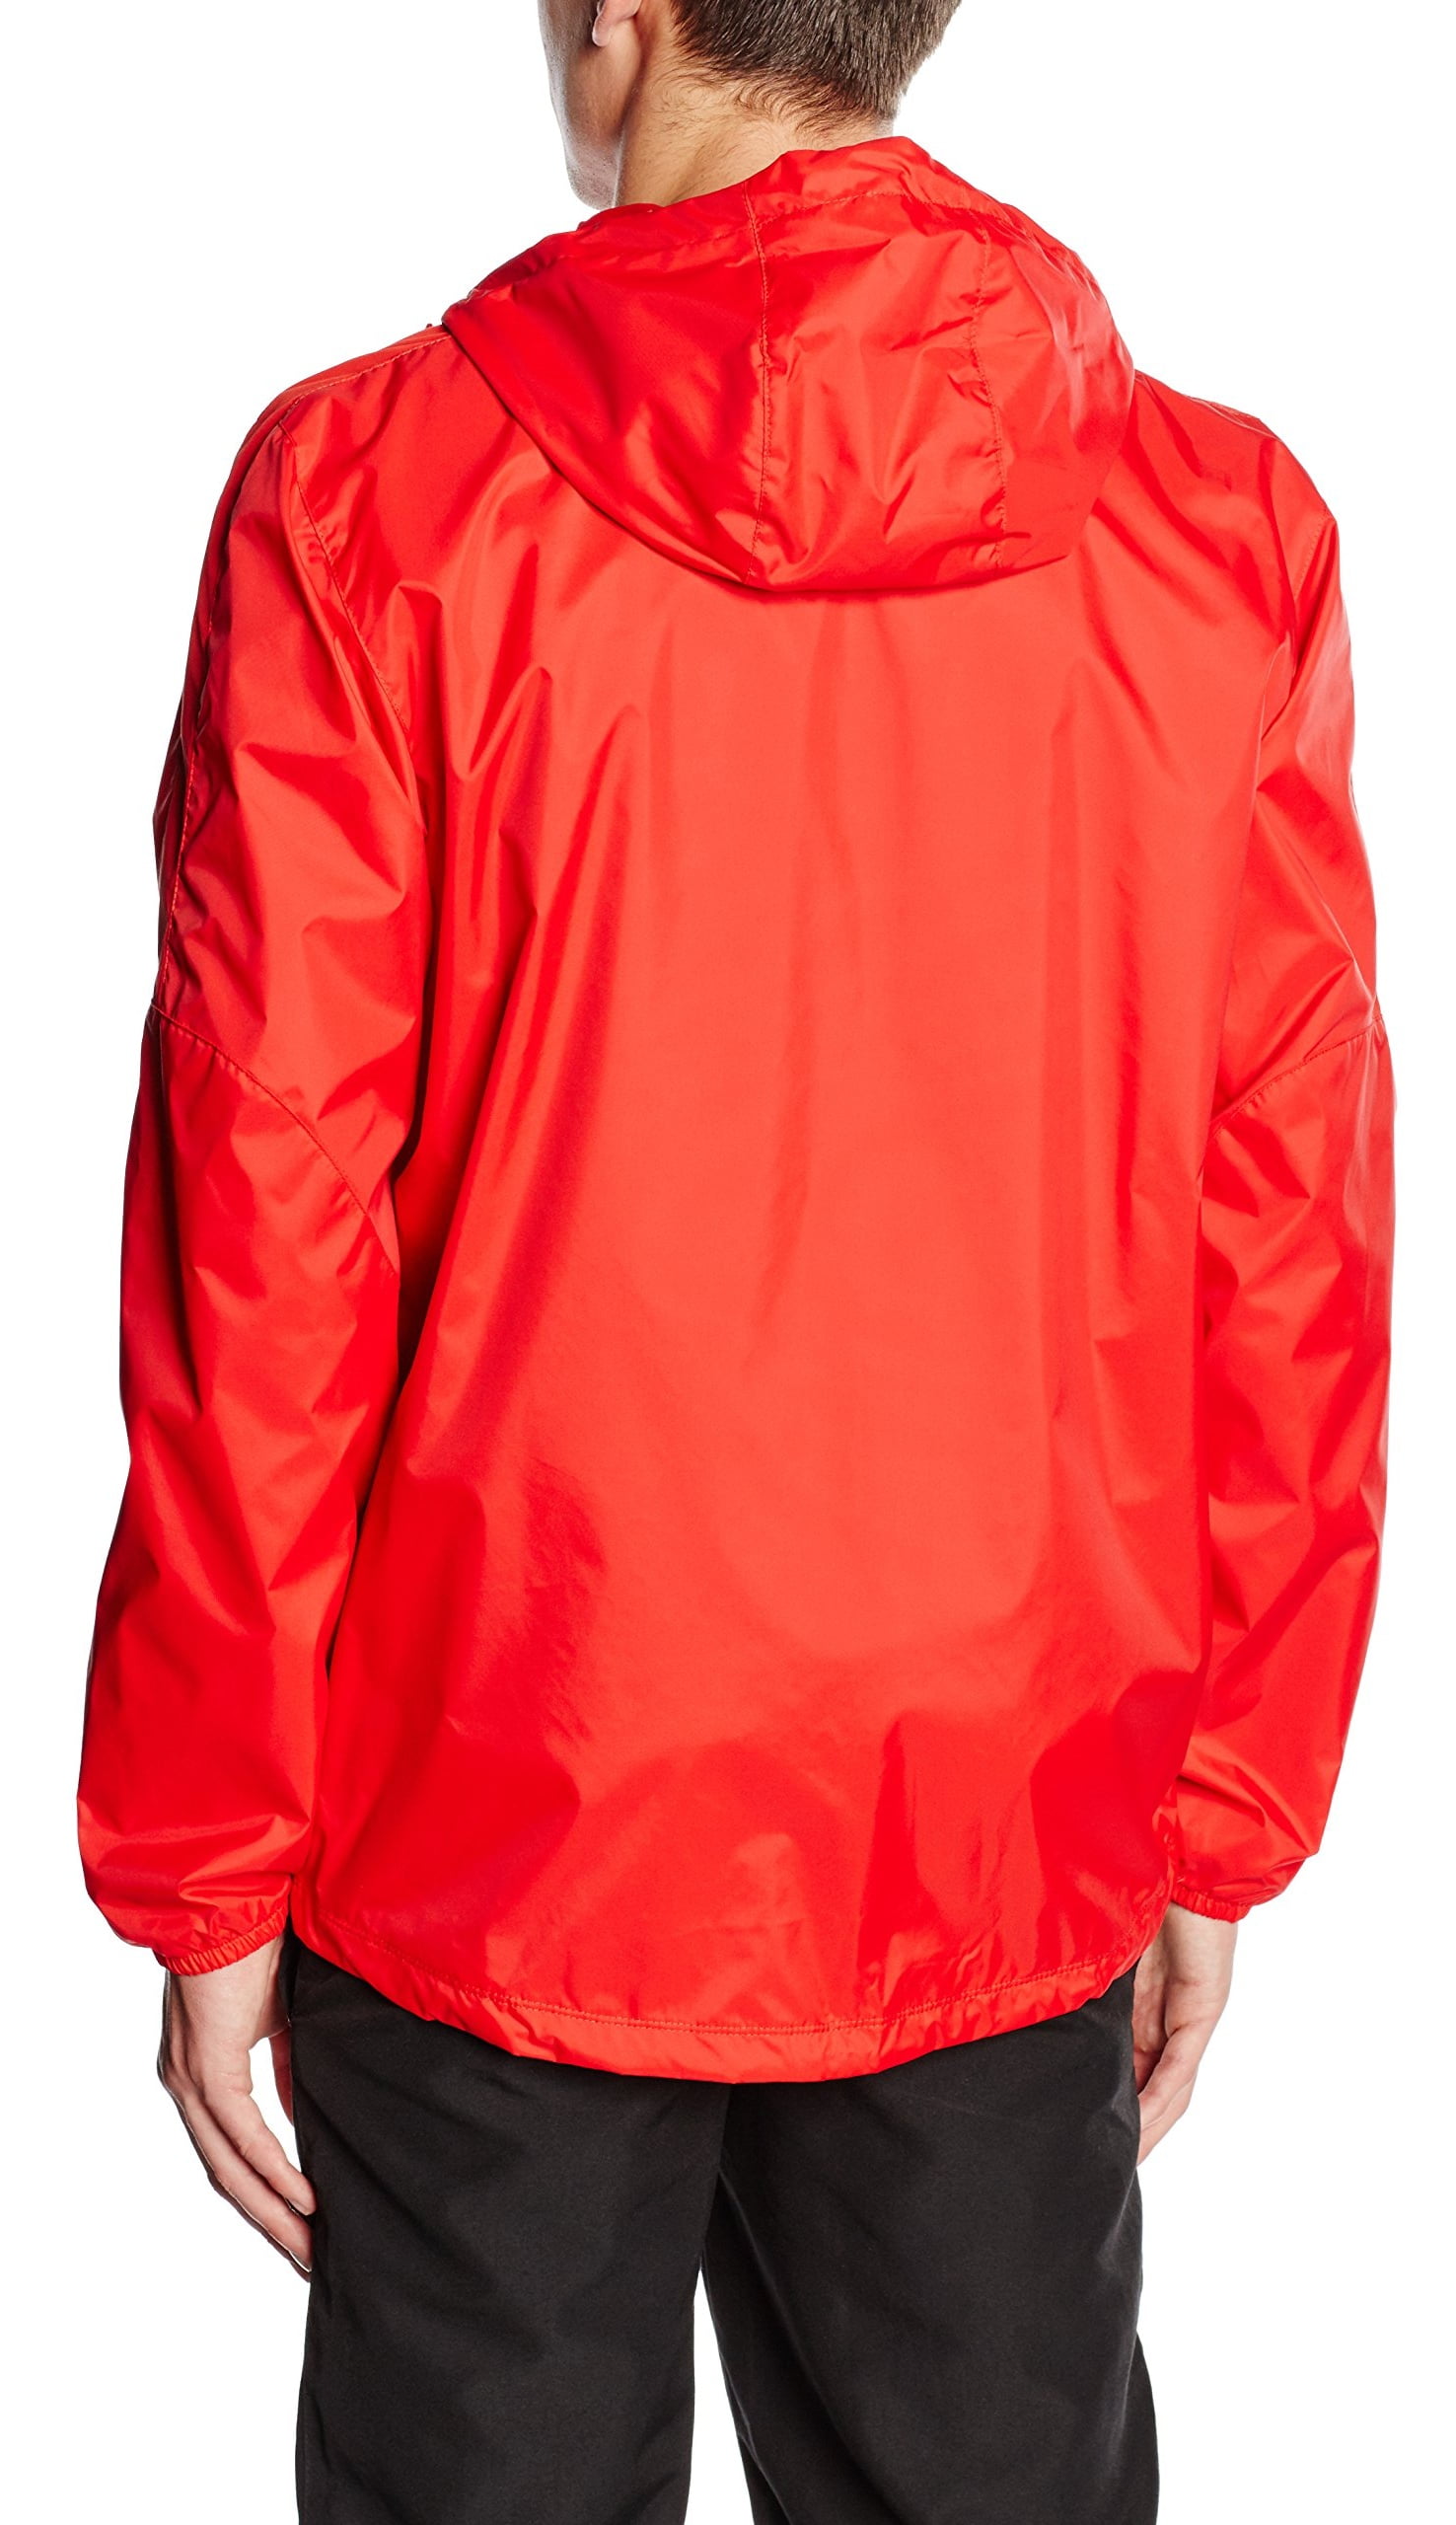 Nike Men's Team Sideline Rain nk645480 657 (Red, Medium) - Walmart.com